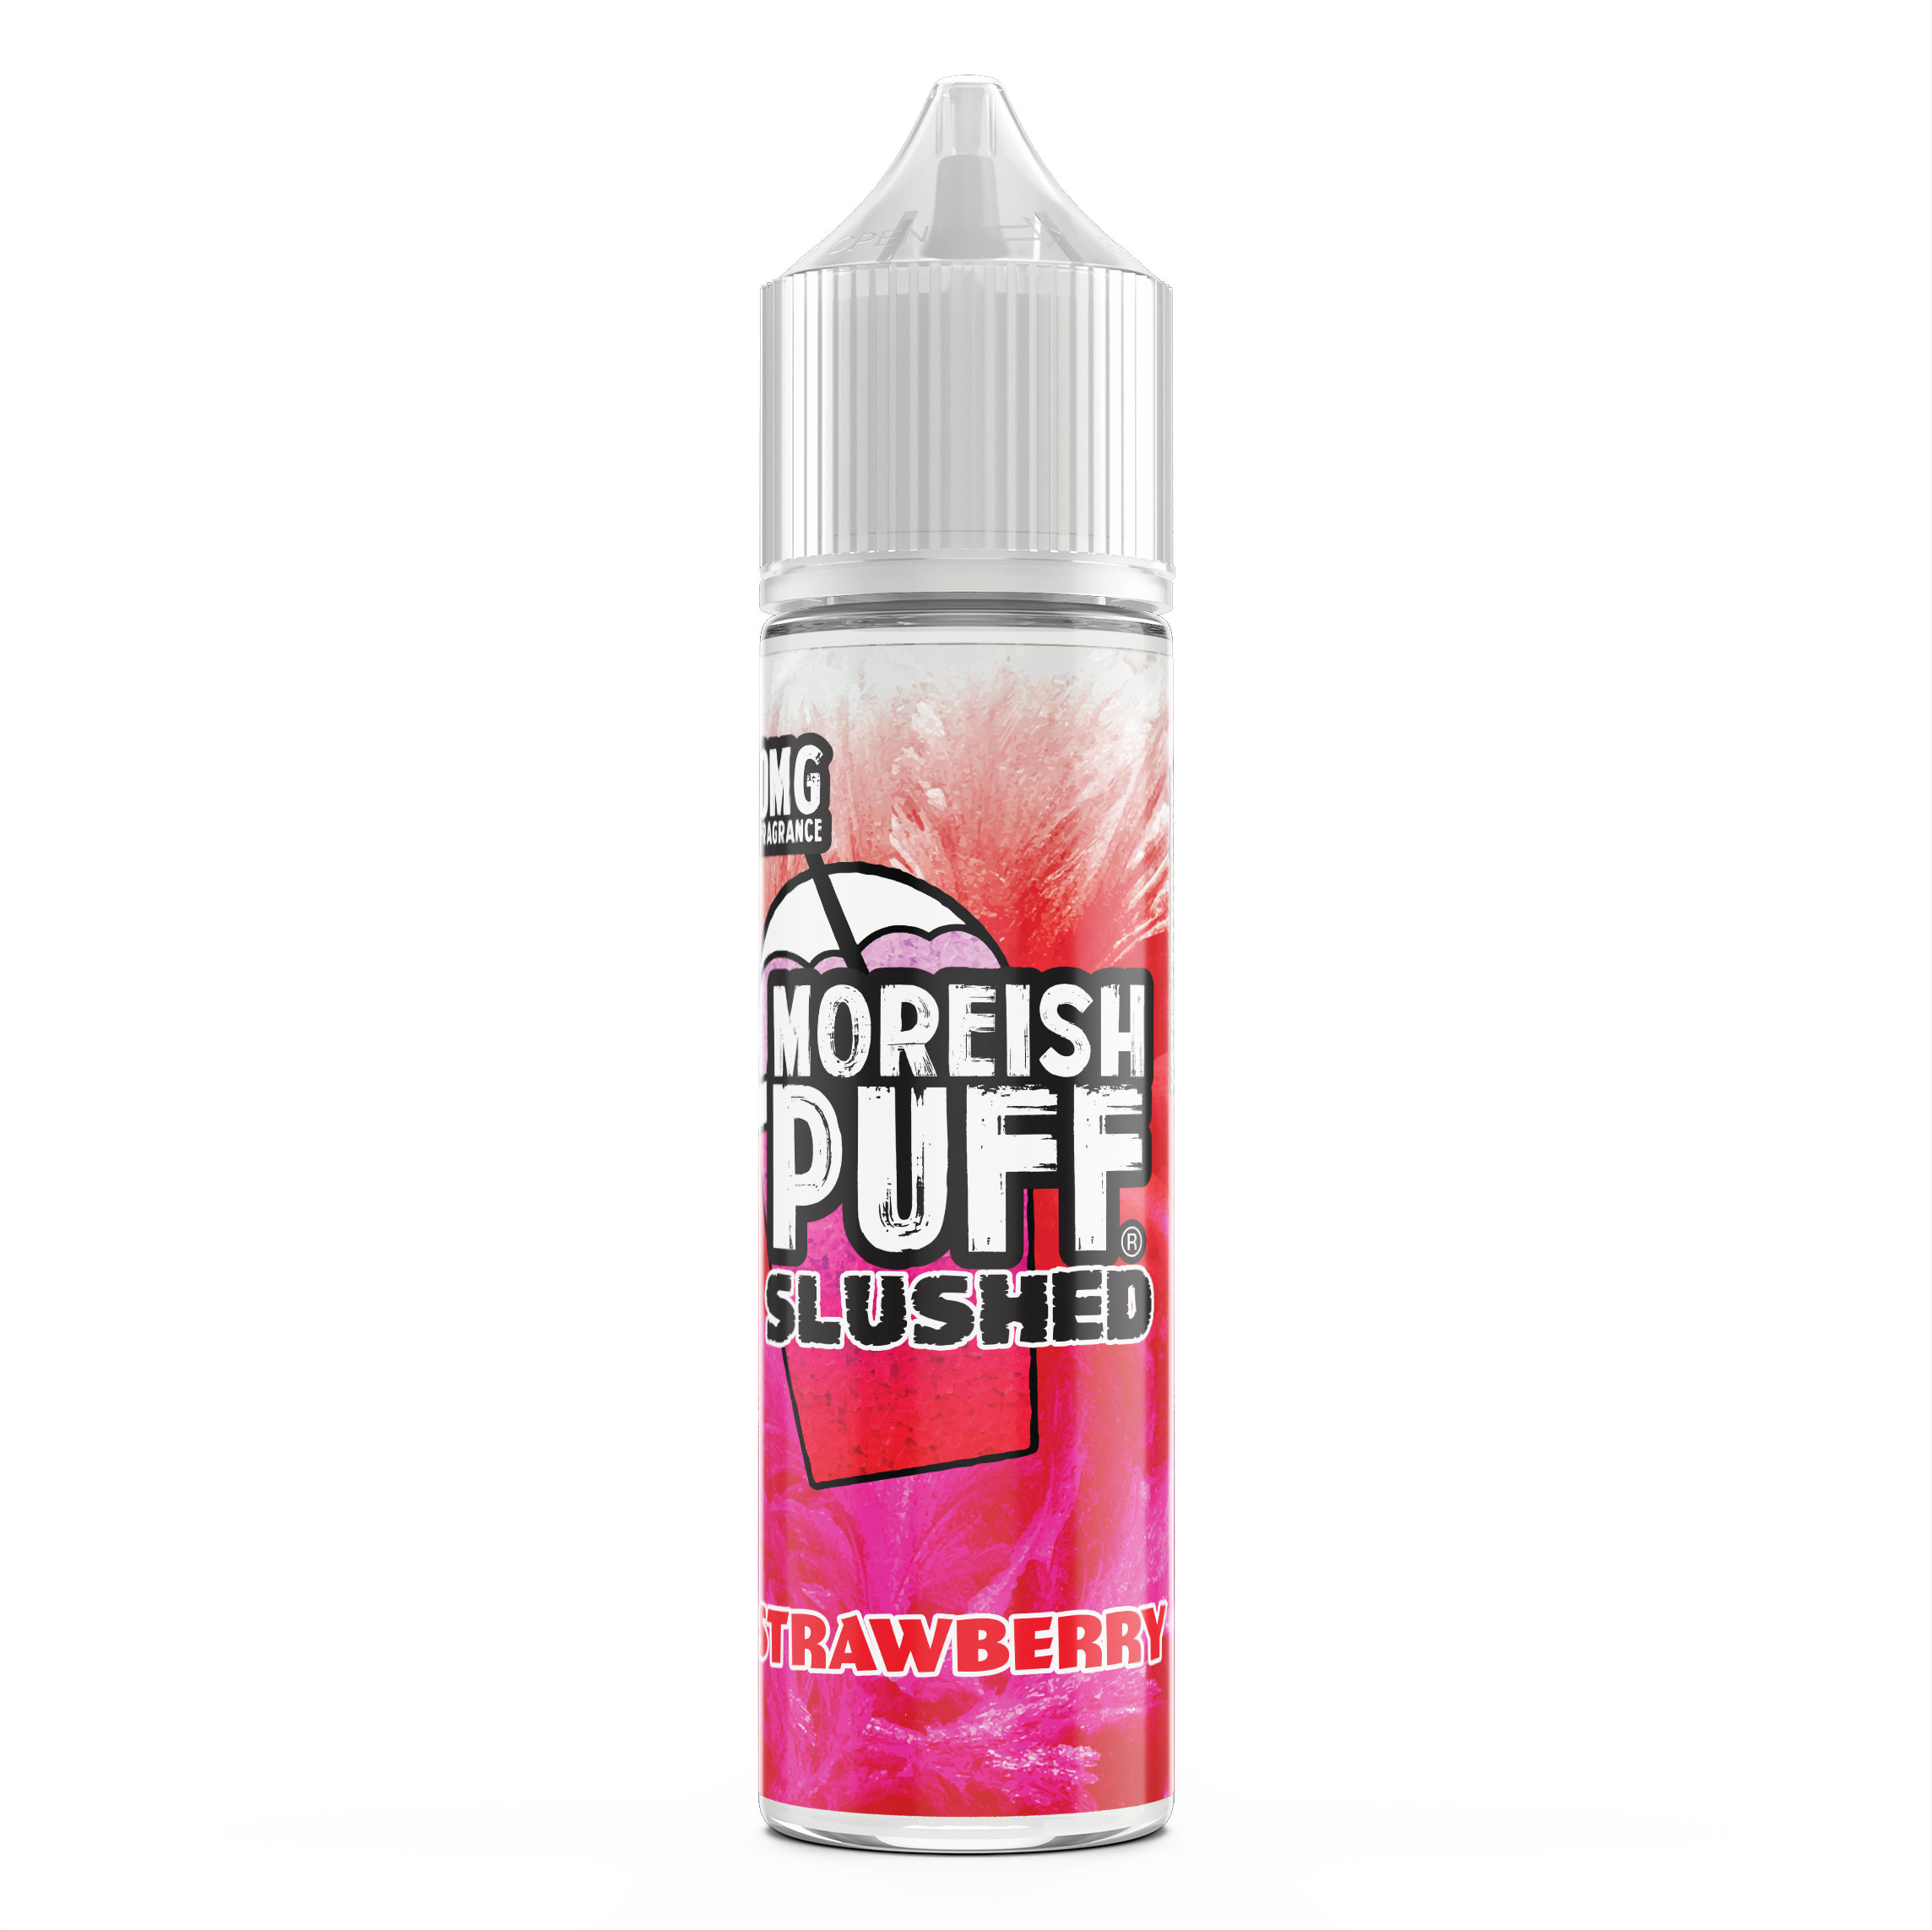 Moreish Puff Slushed Strawberry 0mg 50ml Shortfill E-Liquid